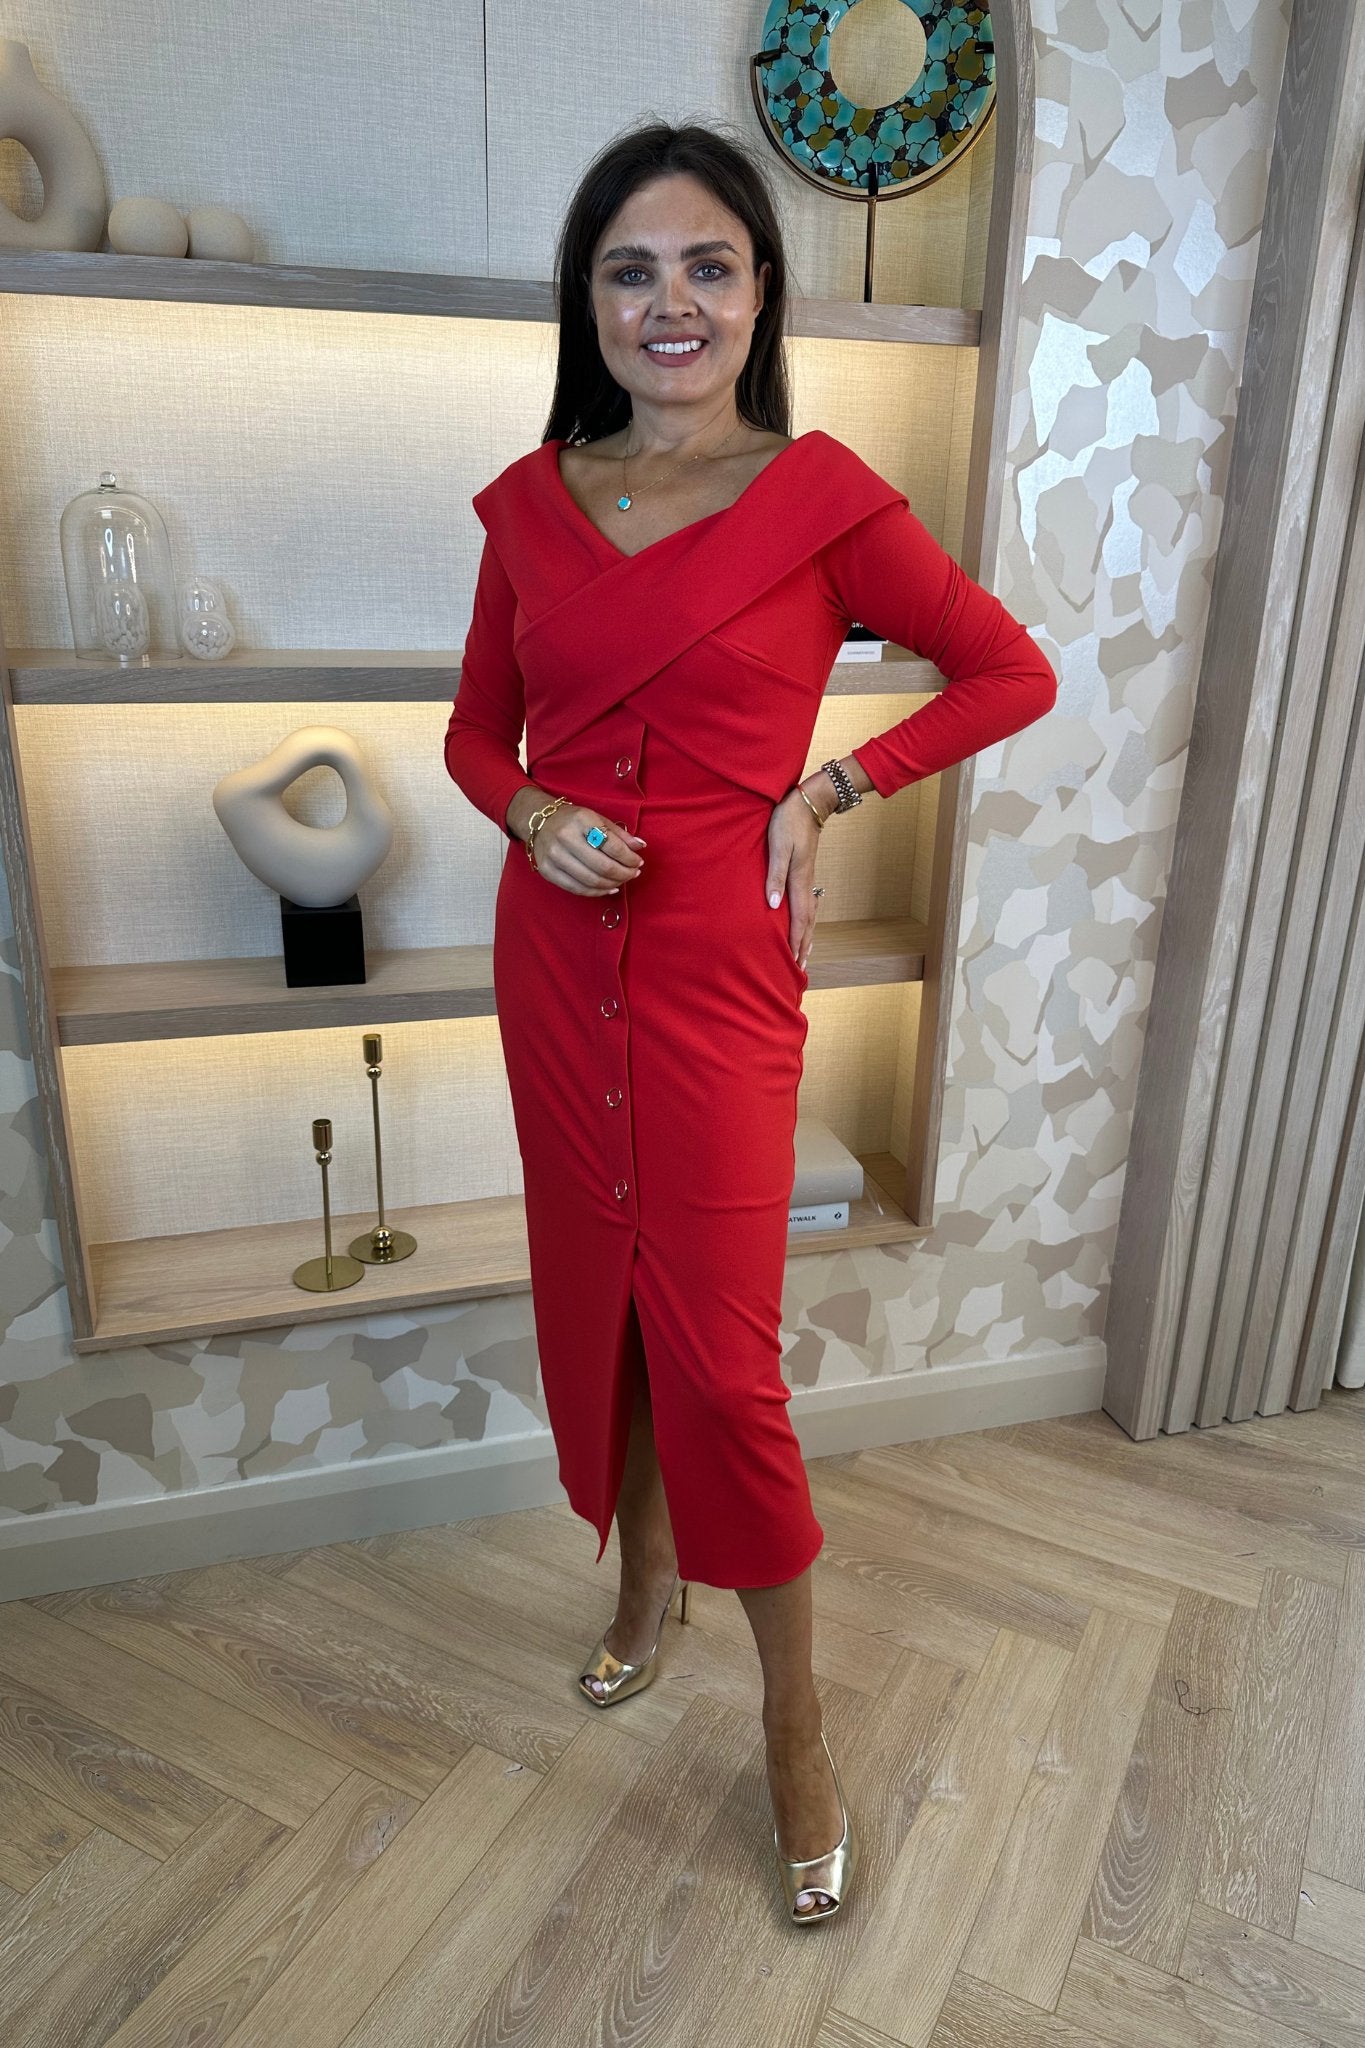 Kayla Crossover Dress In Red - The Walk in Wardrobe